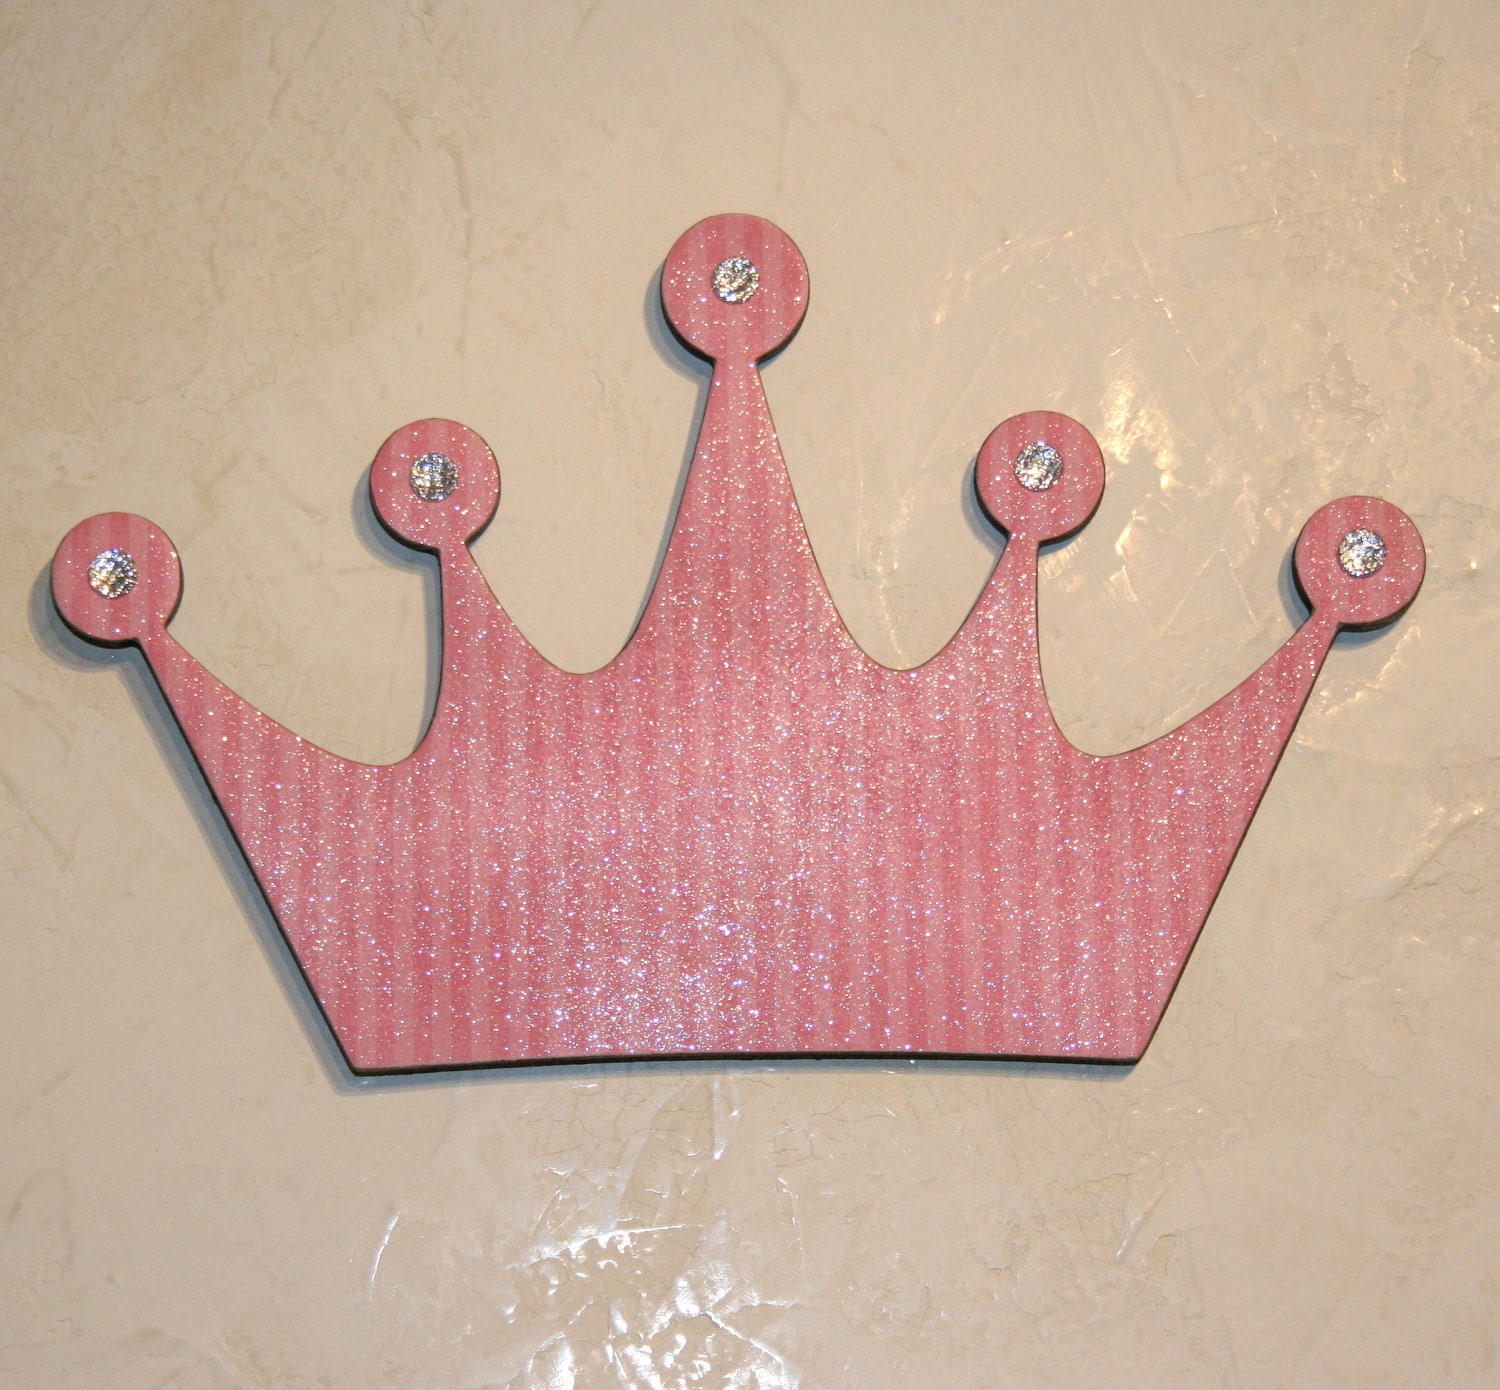 Pink Princess Princess crown wall decor by FinchnWillowBoutique